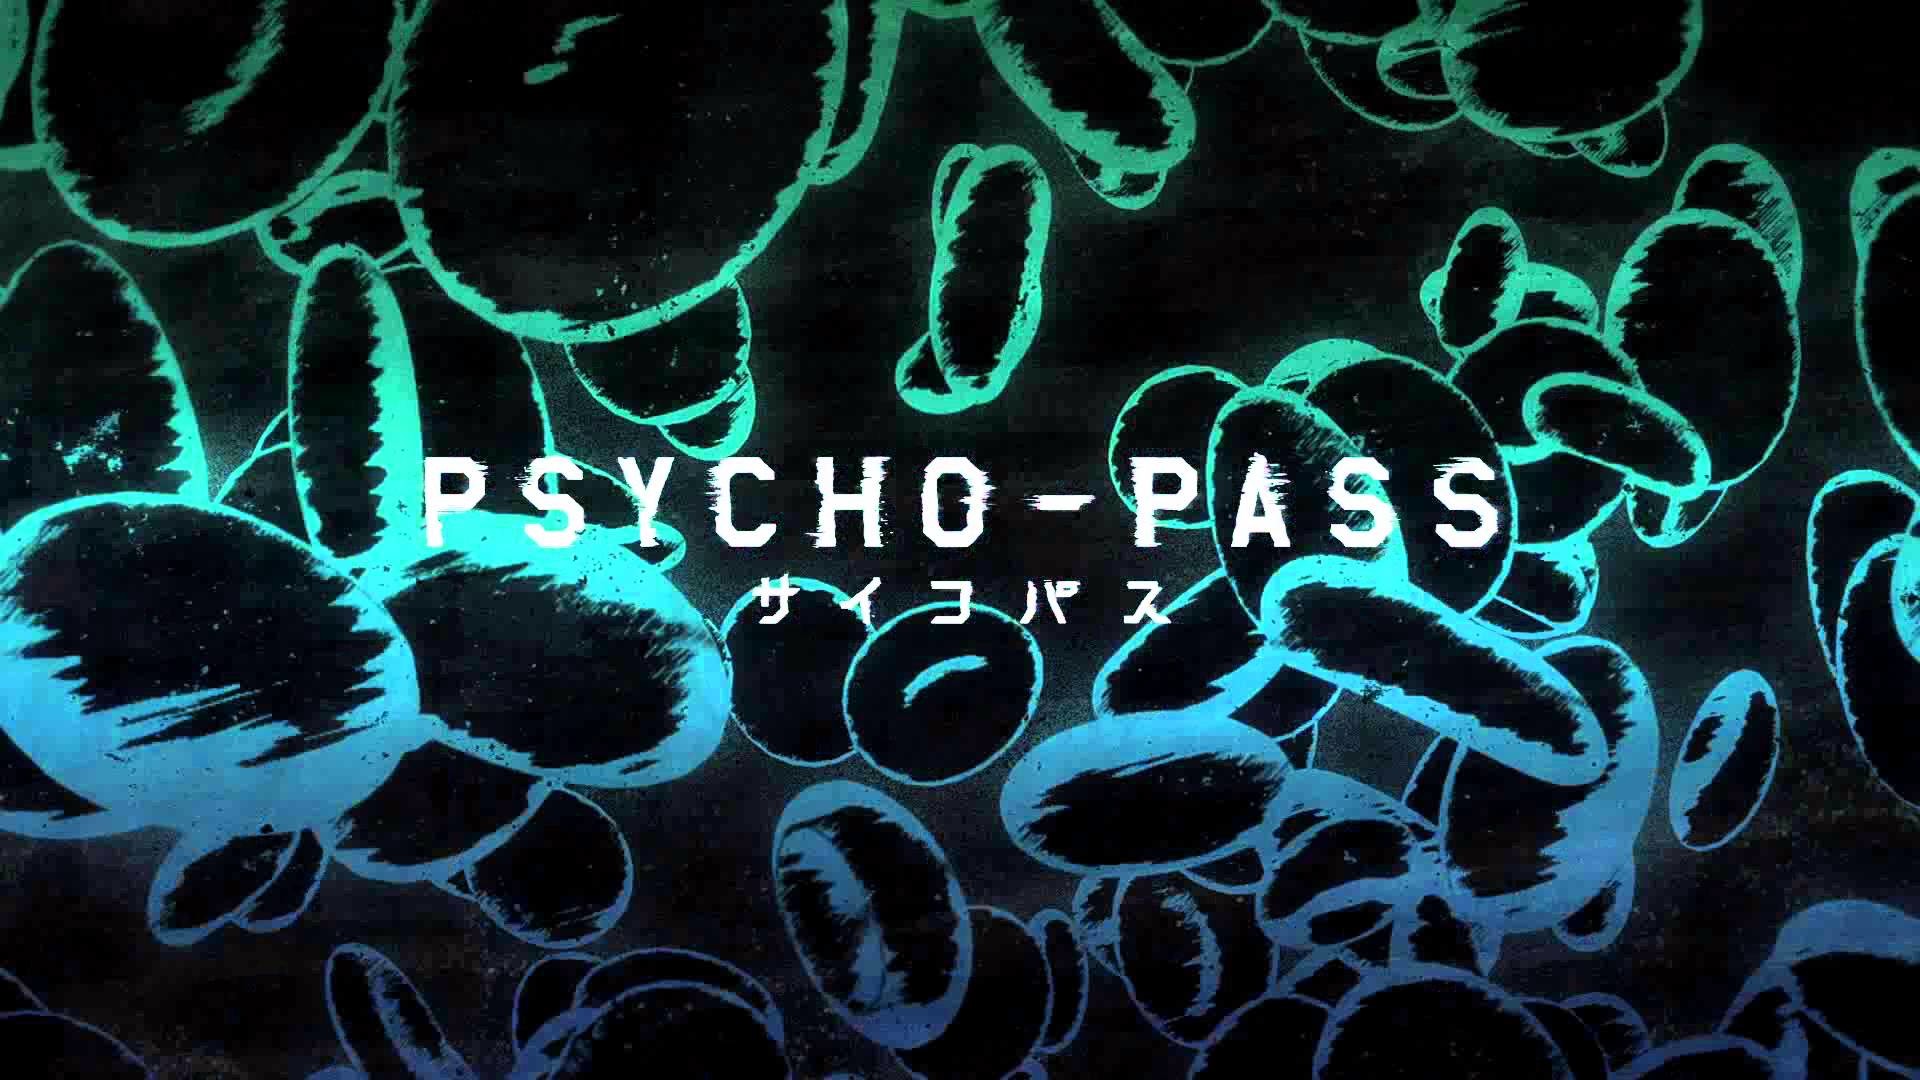 1920x1080 Psycho-pass - YouTube